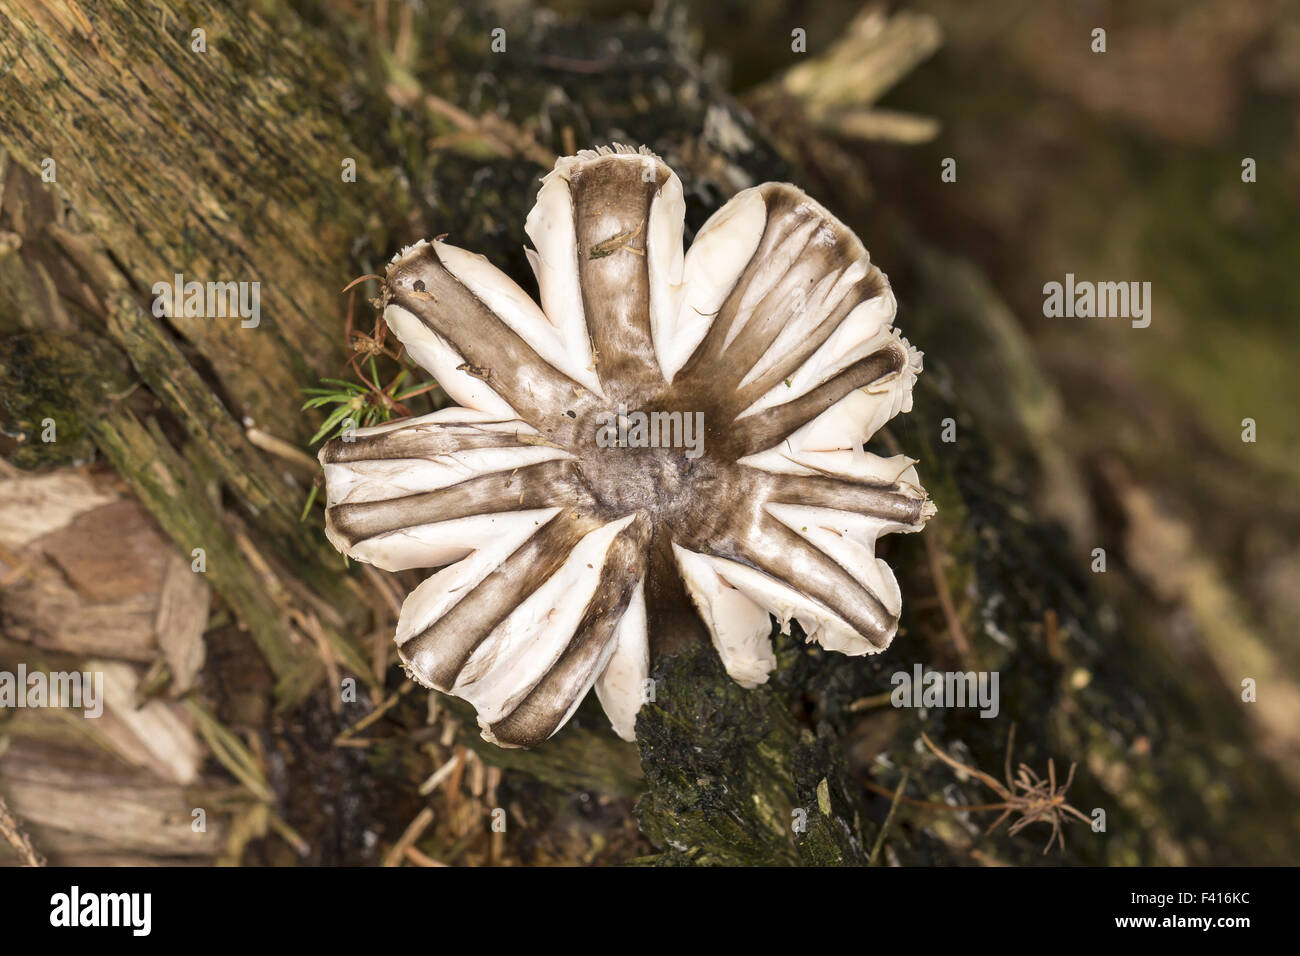 Pluteus species fungus, mushroom Stock Photo